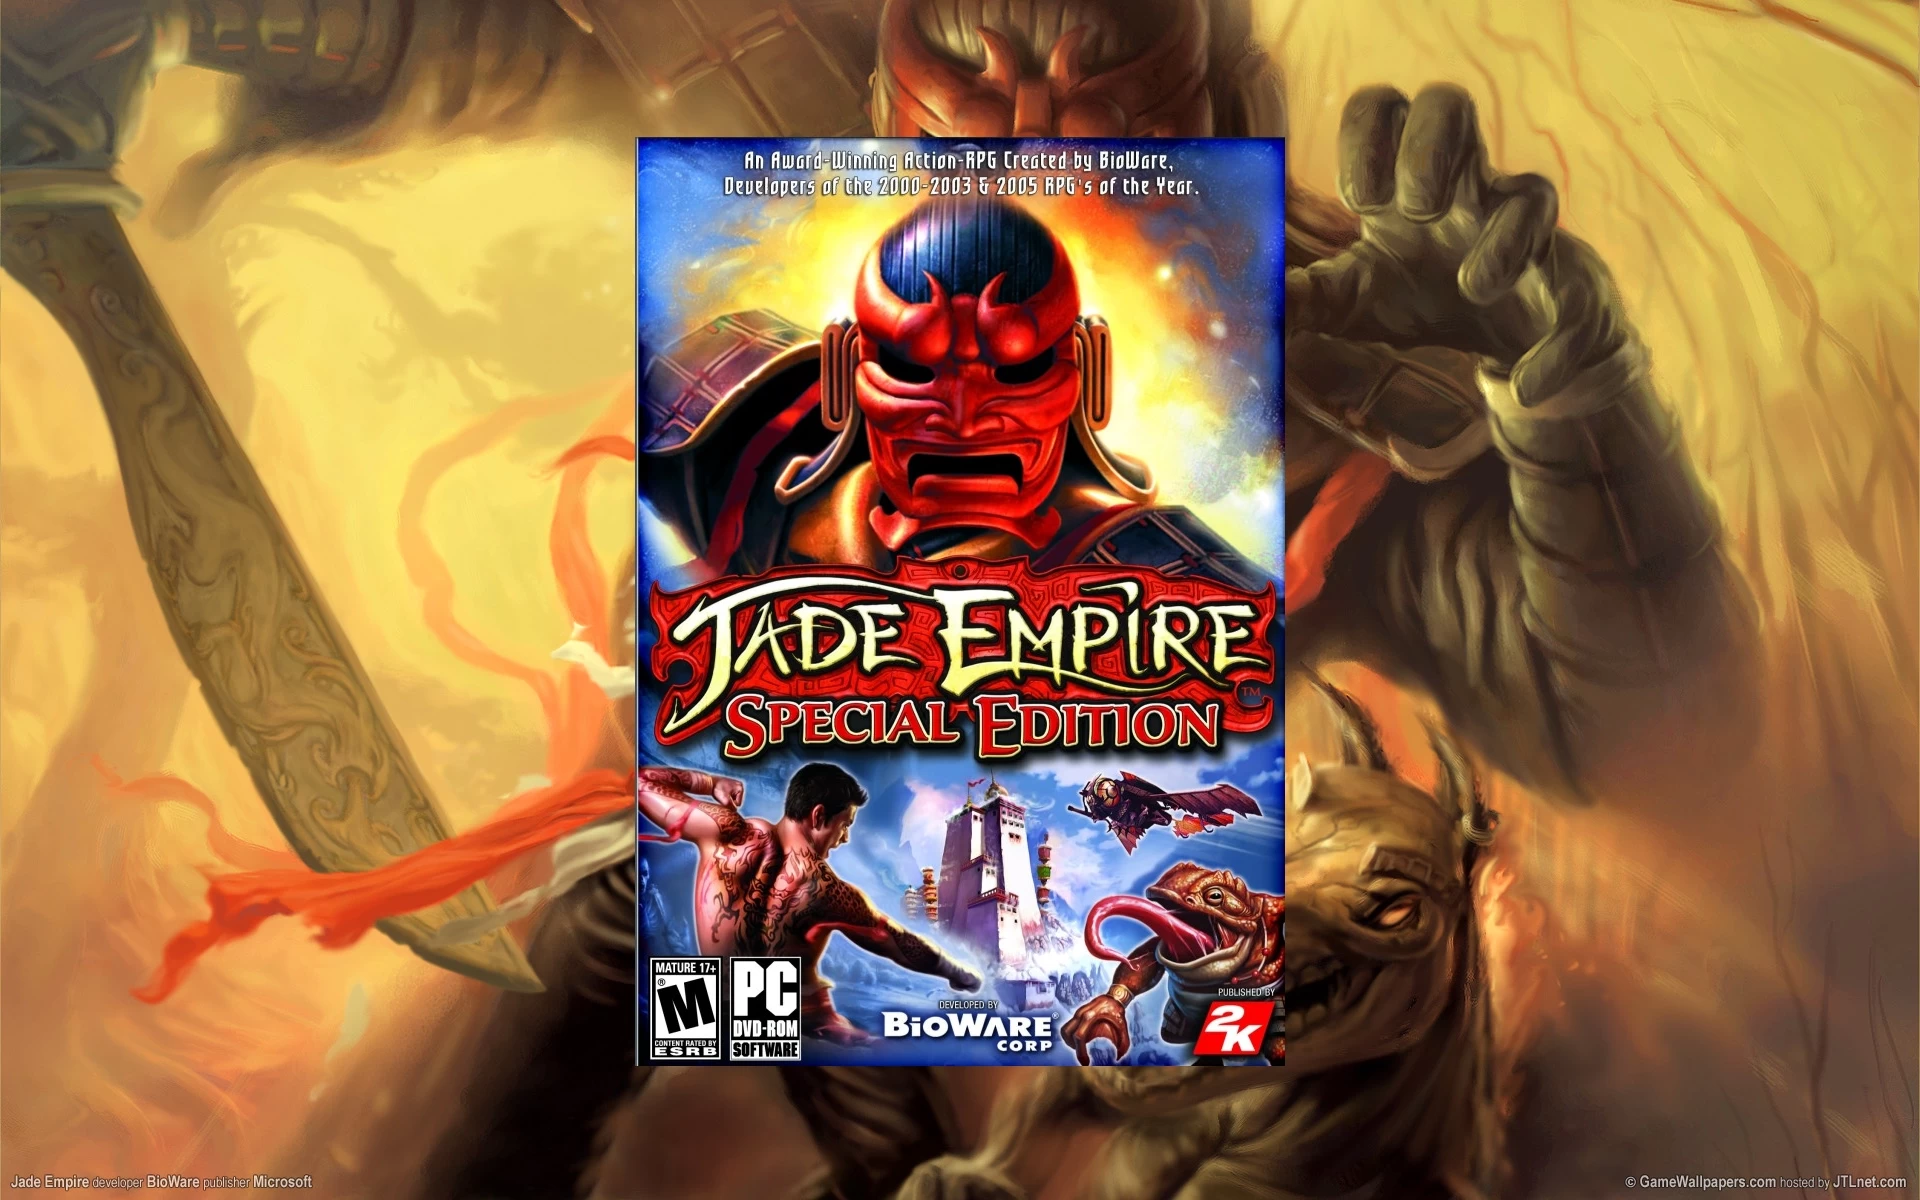 jade empire special edition | jade empire | EA แจกฟรี! เกมในตำนานประมาณ 10 ปีก่อน 'Jade empire special edition' เกมตัวเต็มเวอร์ชั่น PC เปิดจำหน่ายราคา 0 บาทในเวลาจำกัด [วิธีดาวน์โหลดด้านใน]